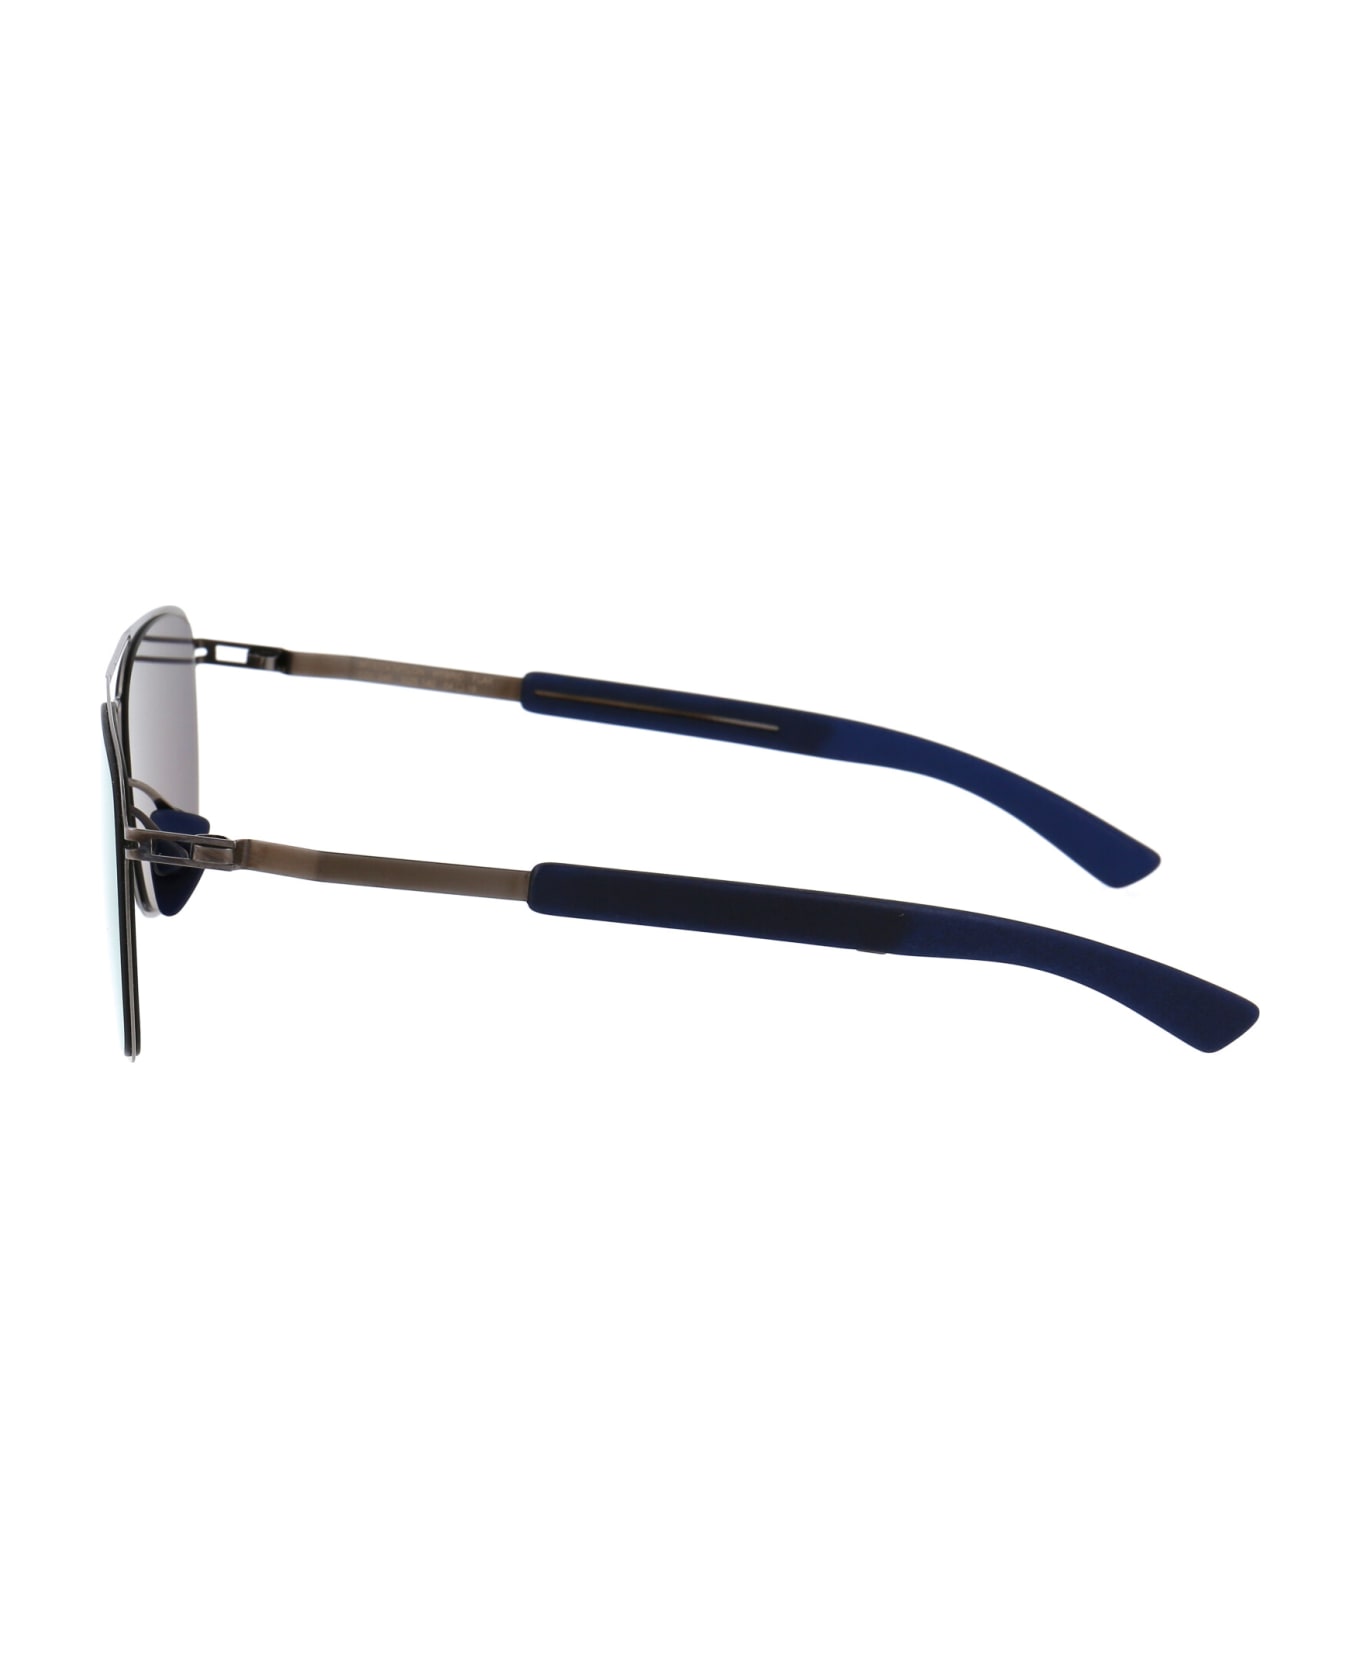 Mykita Flax Sunglasses - 246 MH4 Shiny Graphite/Navy Blue Pearlygold Flash